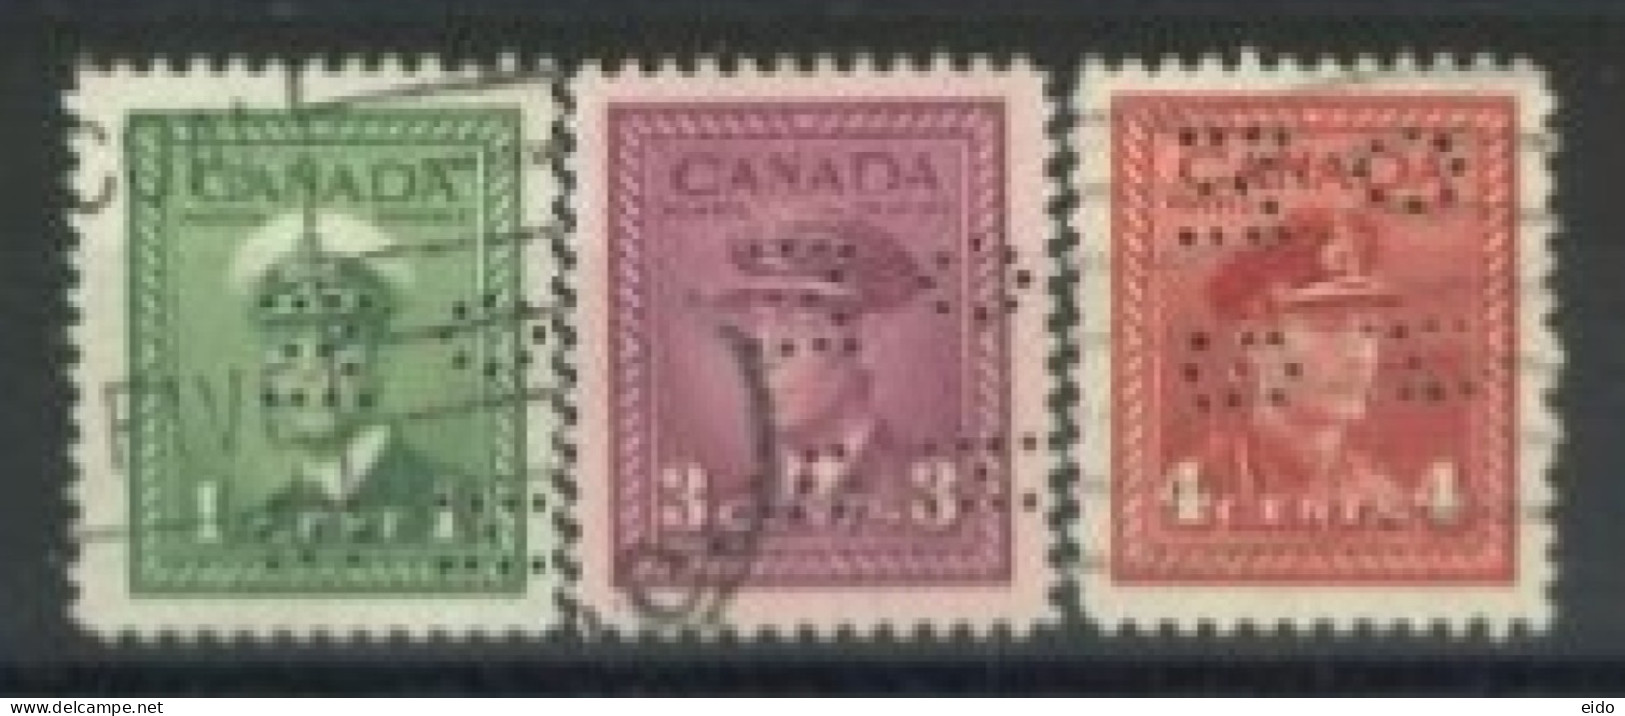 CANADA - 1942, KING GEORGE VI IN NAVAL UNIFORM STAMPS SET OF 3, USED. - Usados